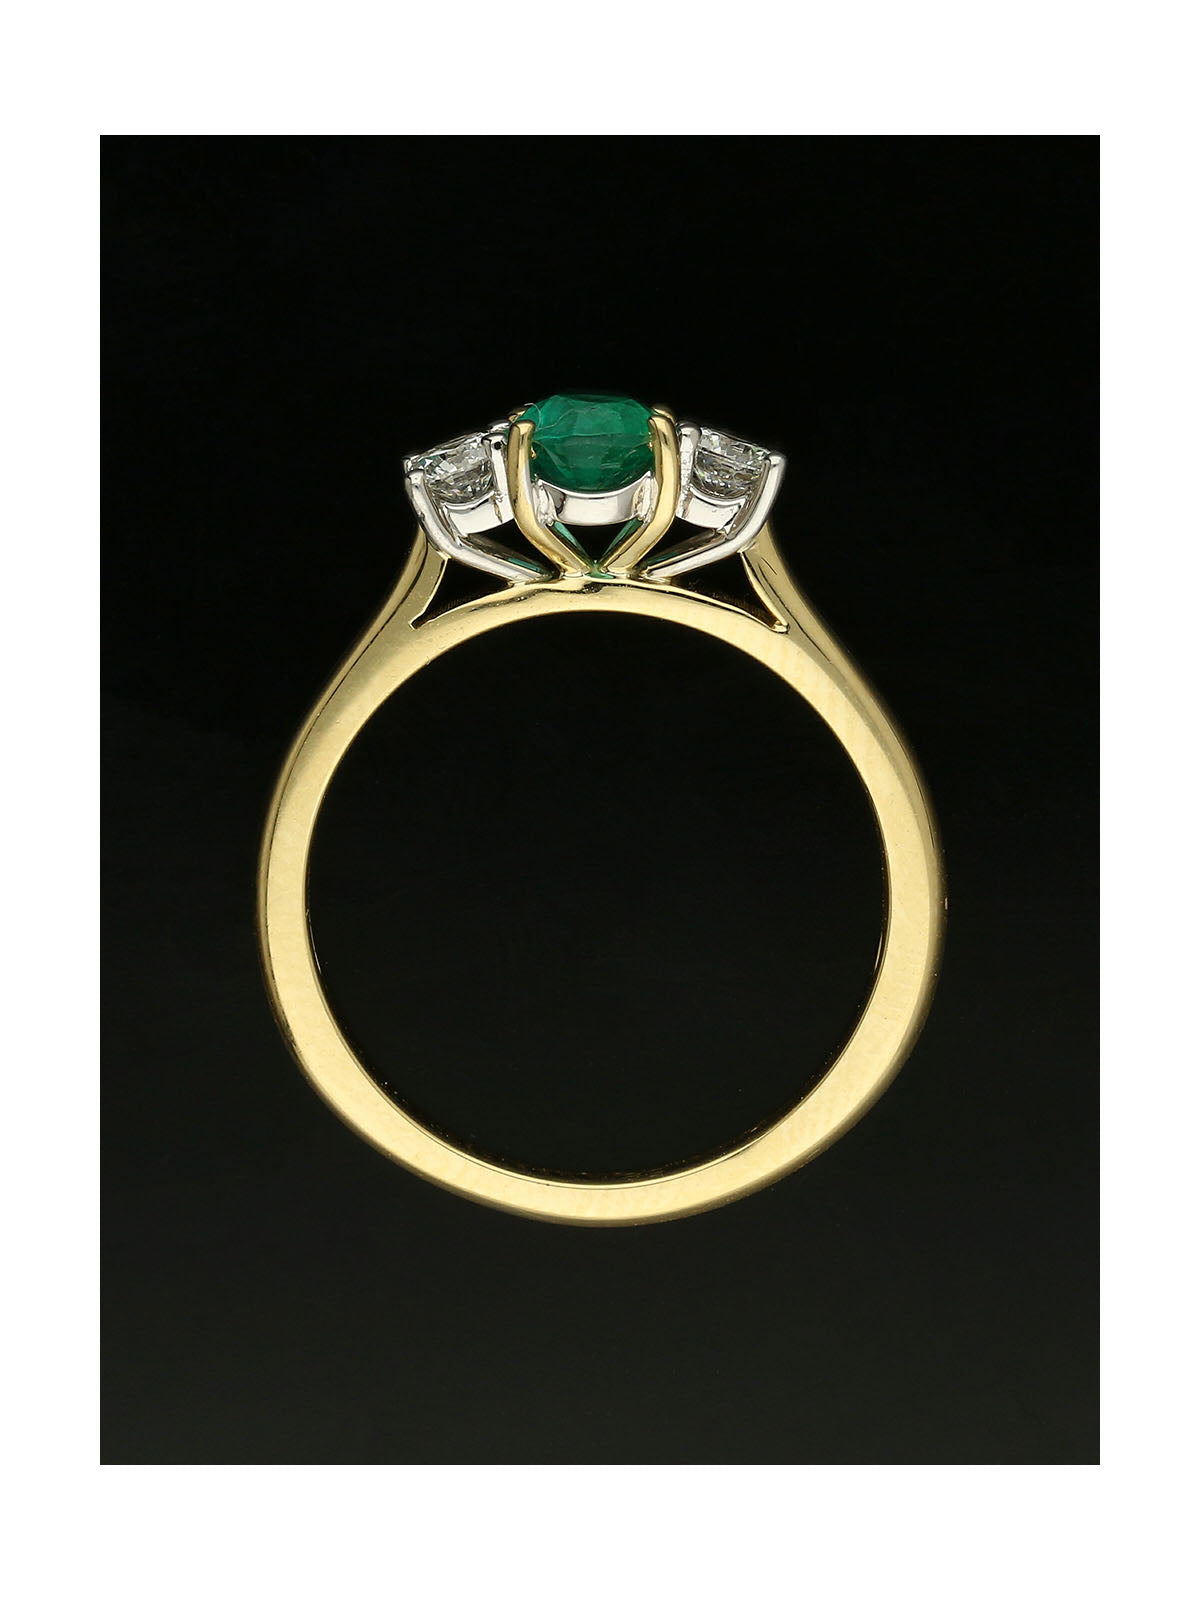 Emerald & Diamond Oval Three Stone Ring in 18ct Yellow & White Gold